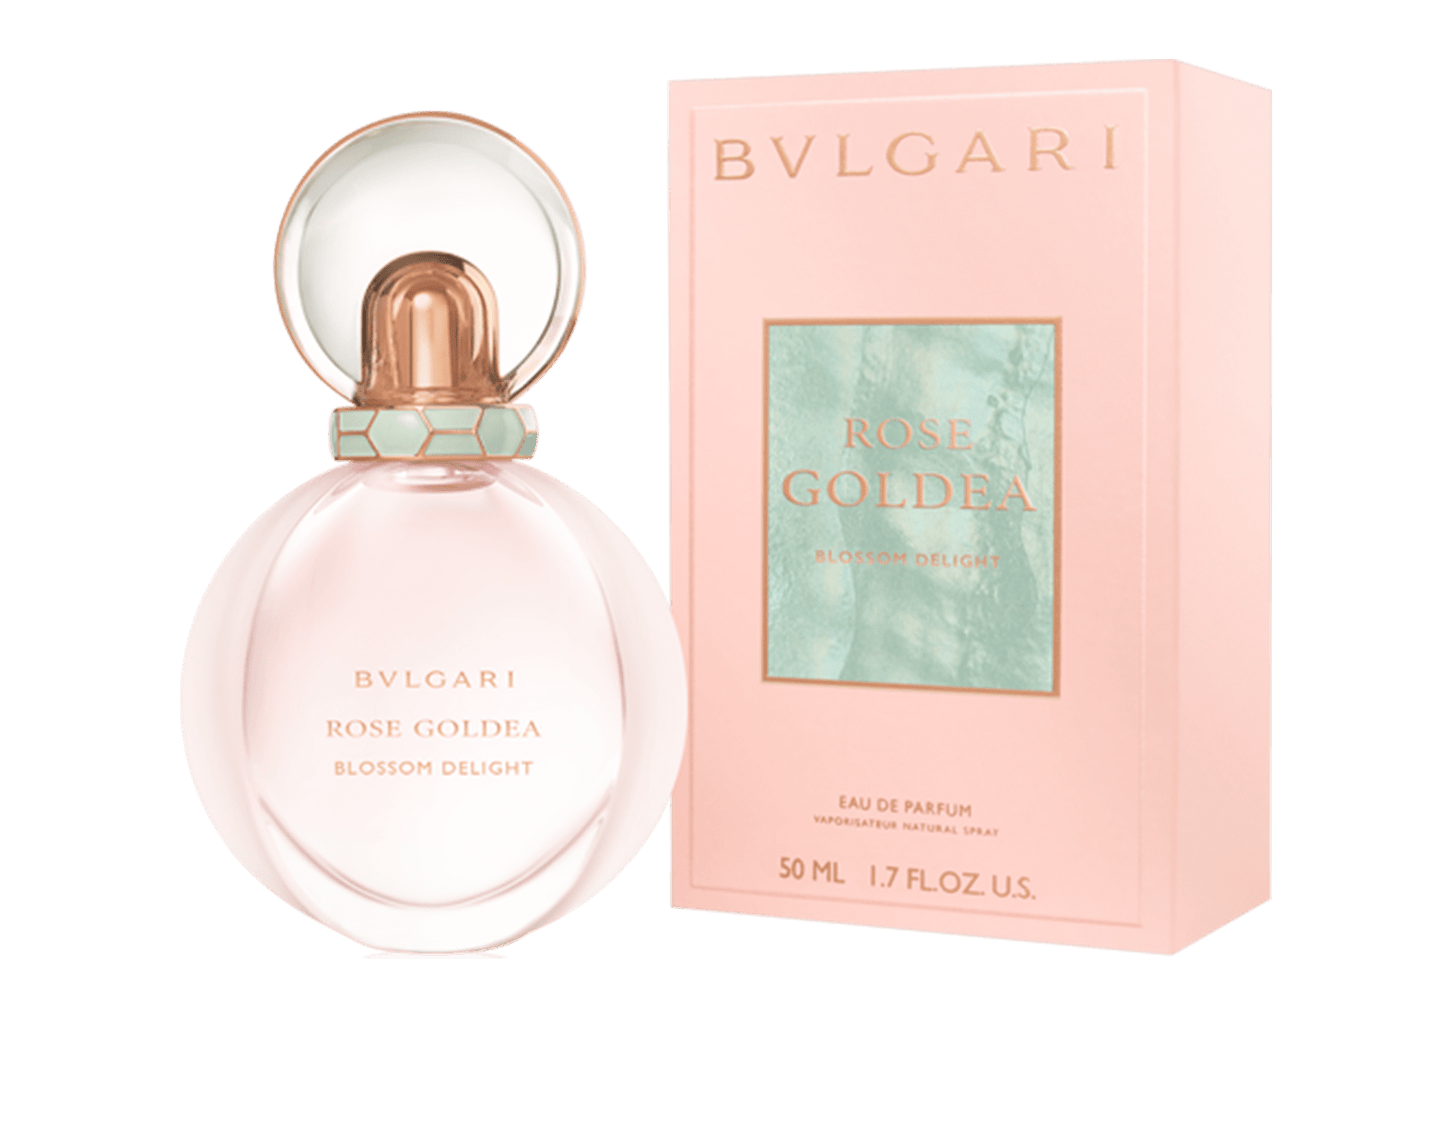 Bvlgari Rose Goldea Blossom Delight Eau de parfum